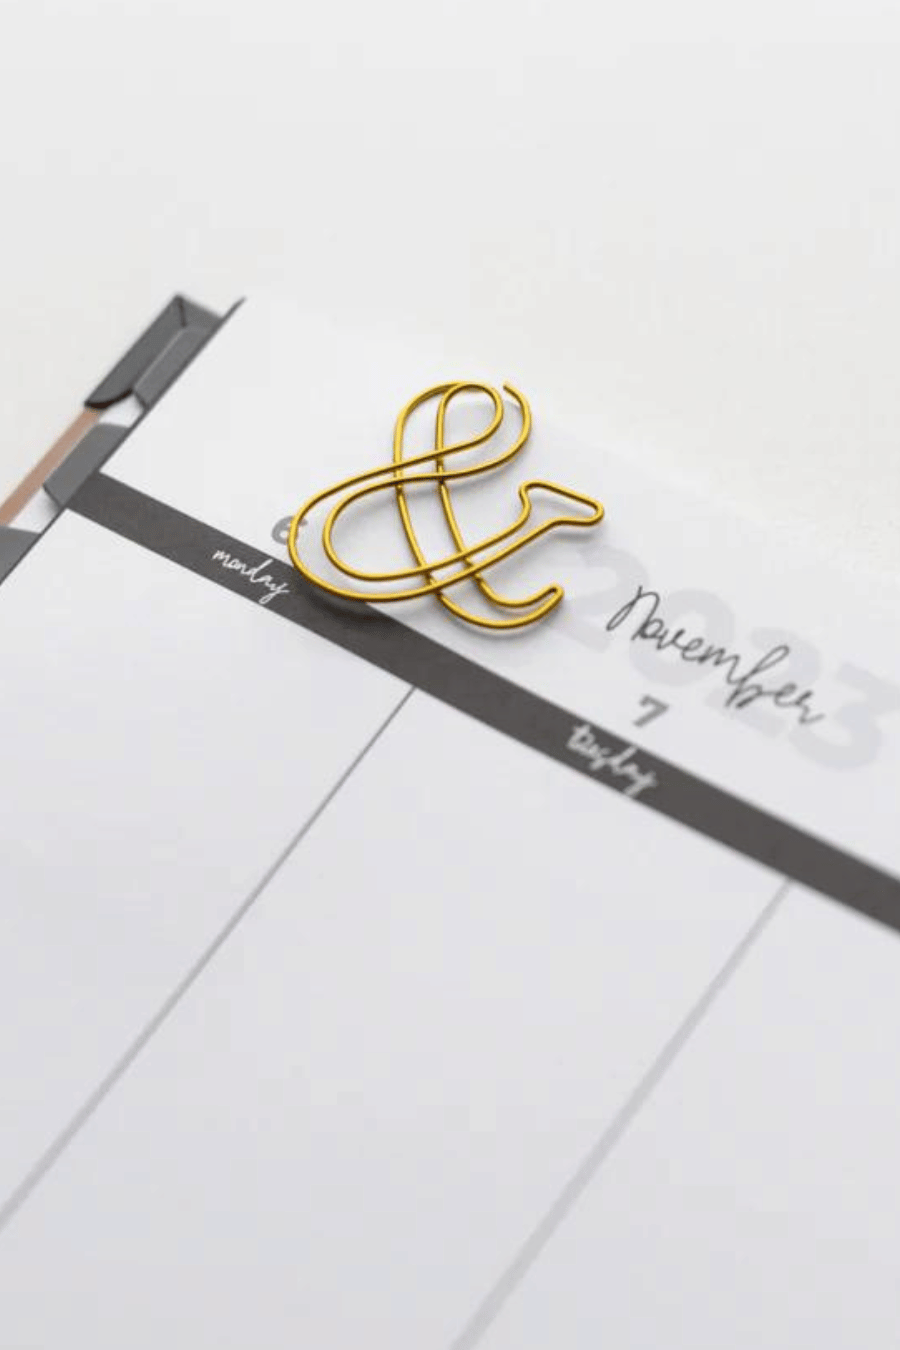 Paper + Plan Co. Gold Paper Clip 10-Pack